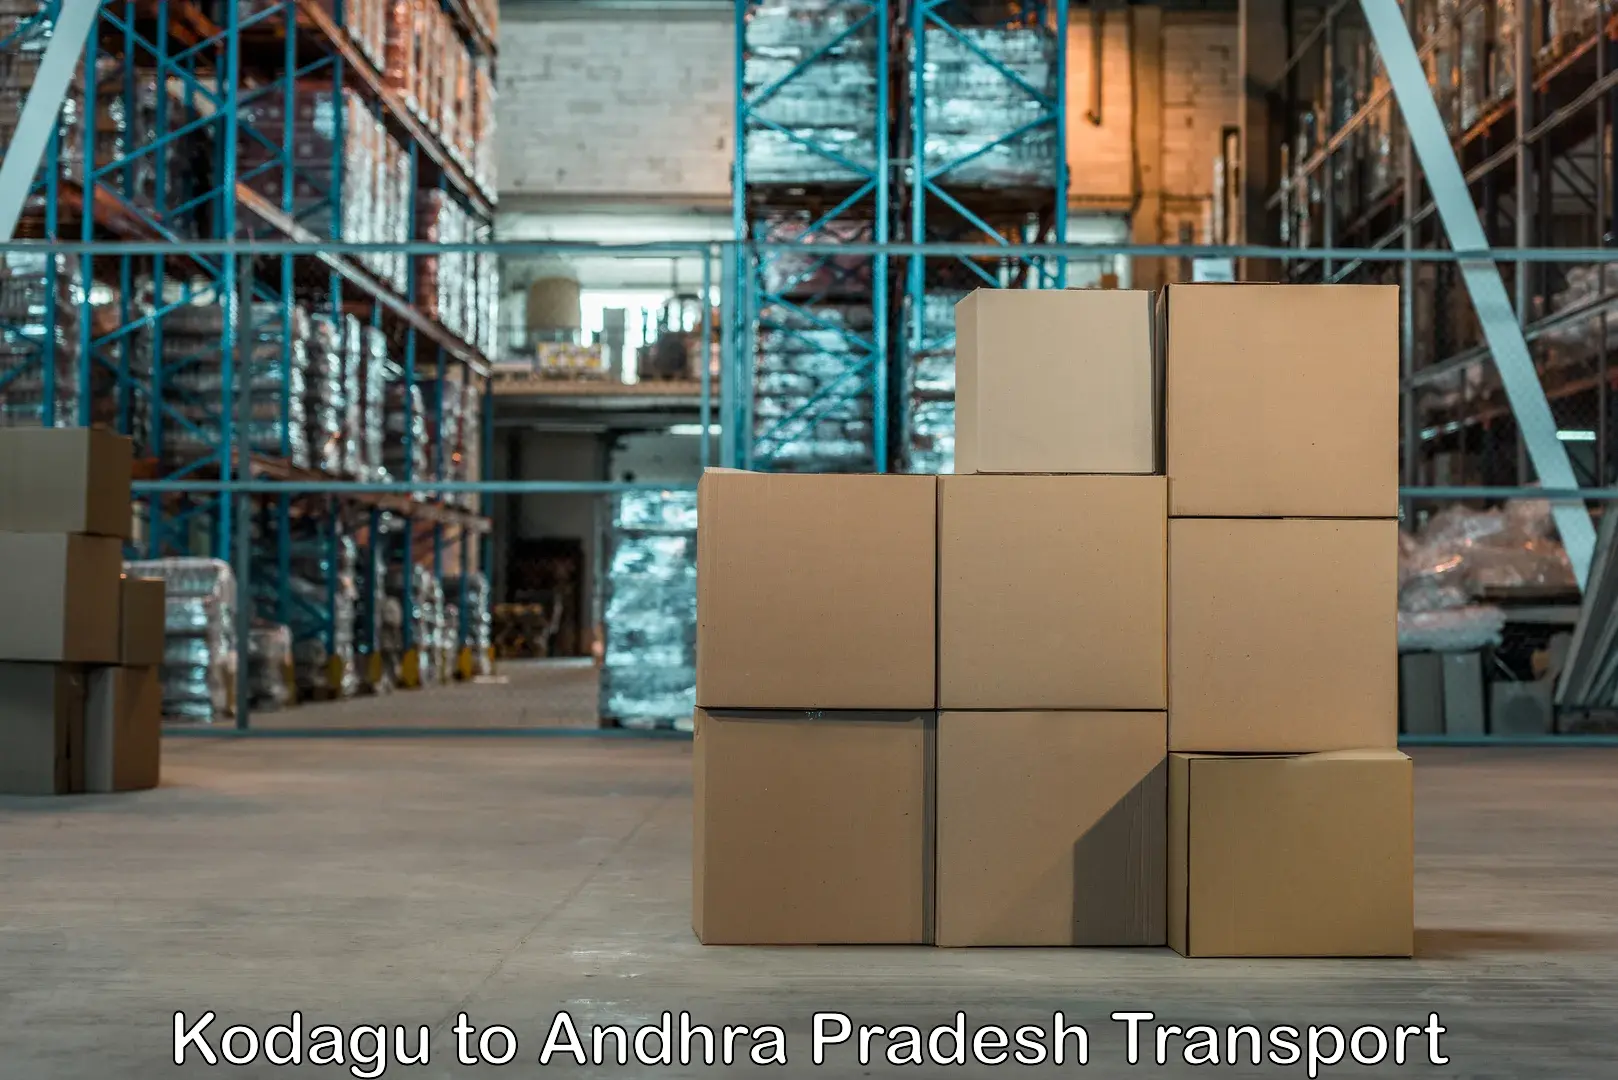 Transport in sharing Kodagu to Podalakur